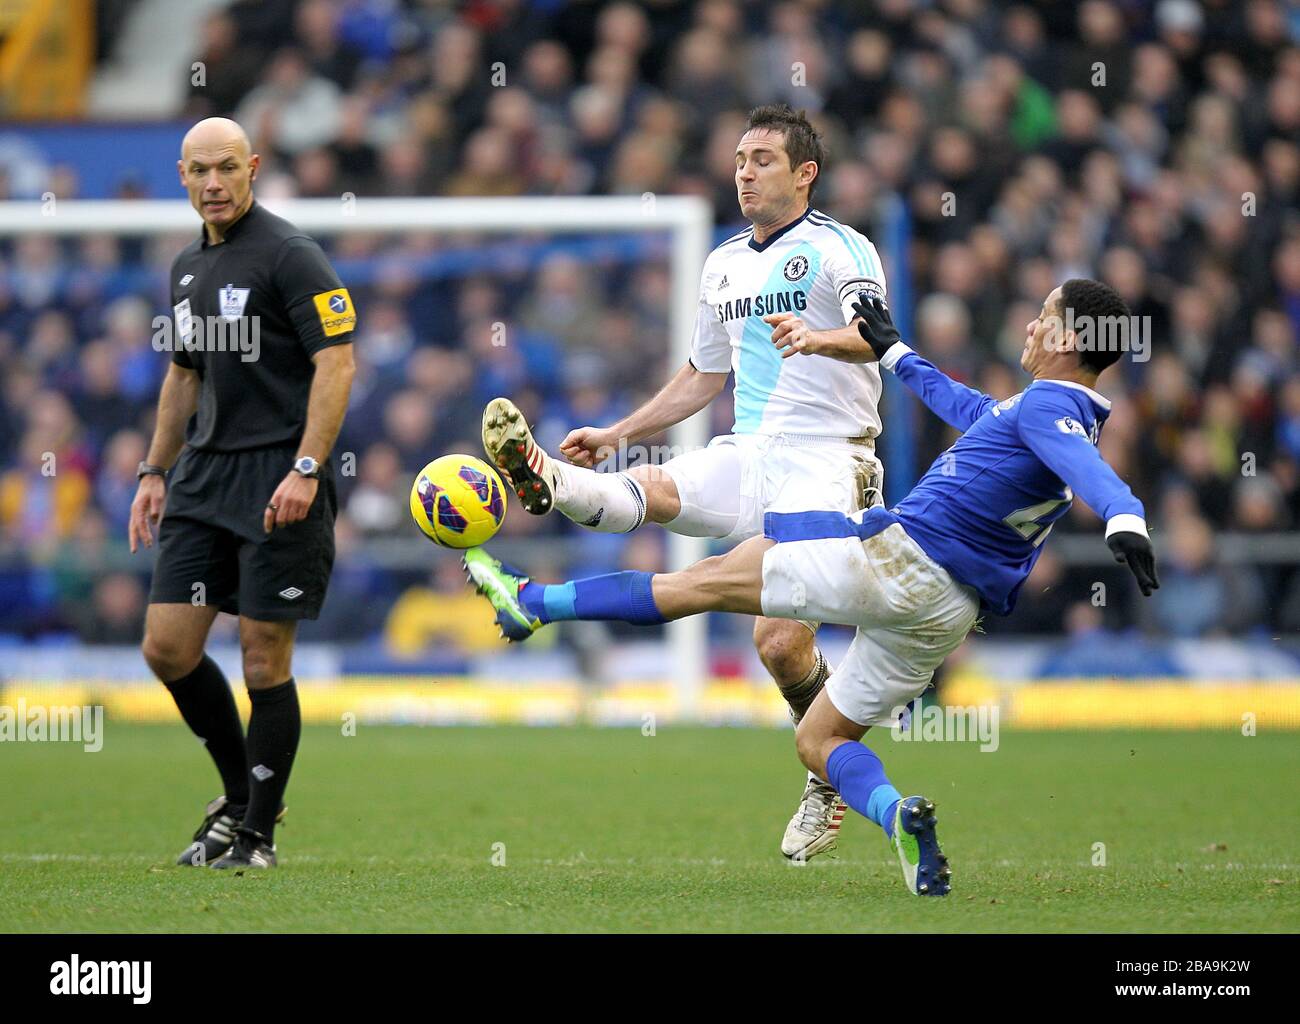 Everton's Steven Pienaar (right) slides in on Chelsea's Frank Lampard (centre) as match referee Howard Webb (left) looks on Stock Photo